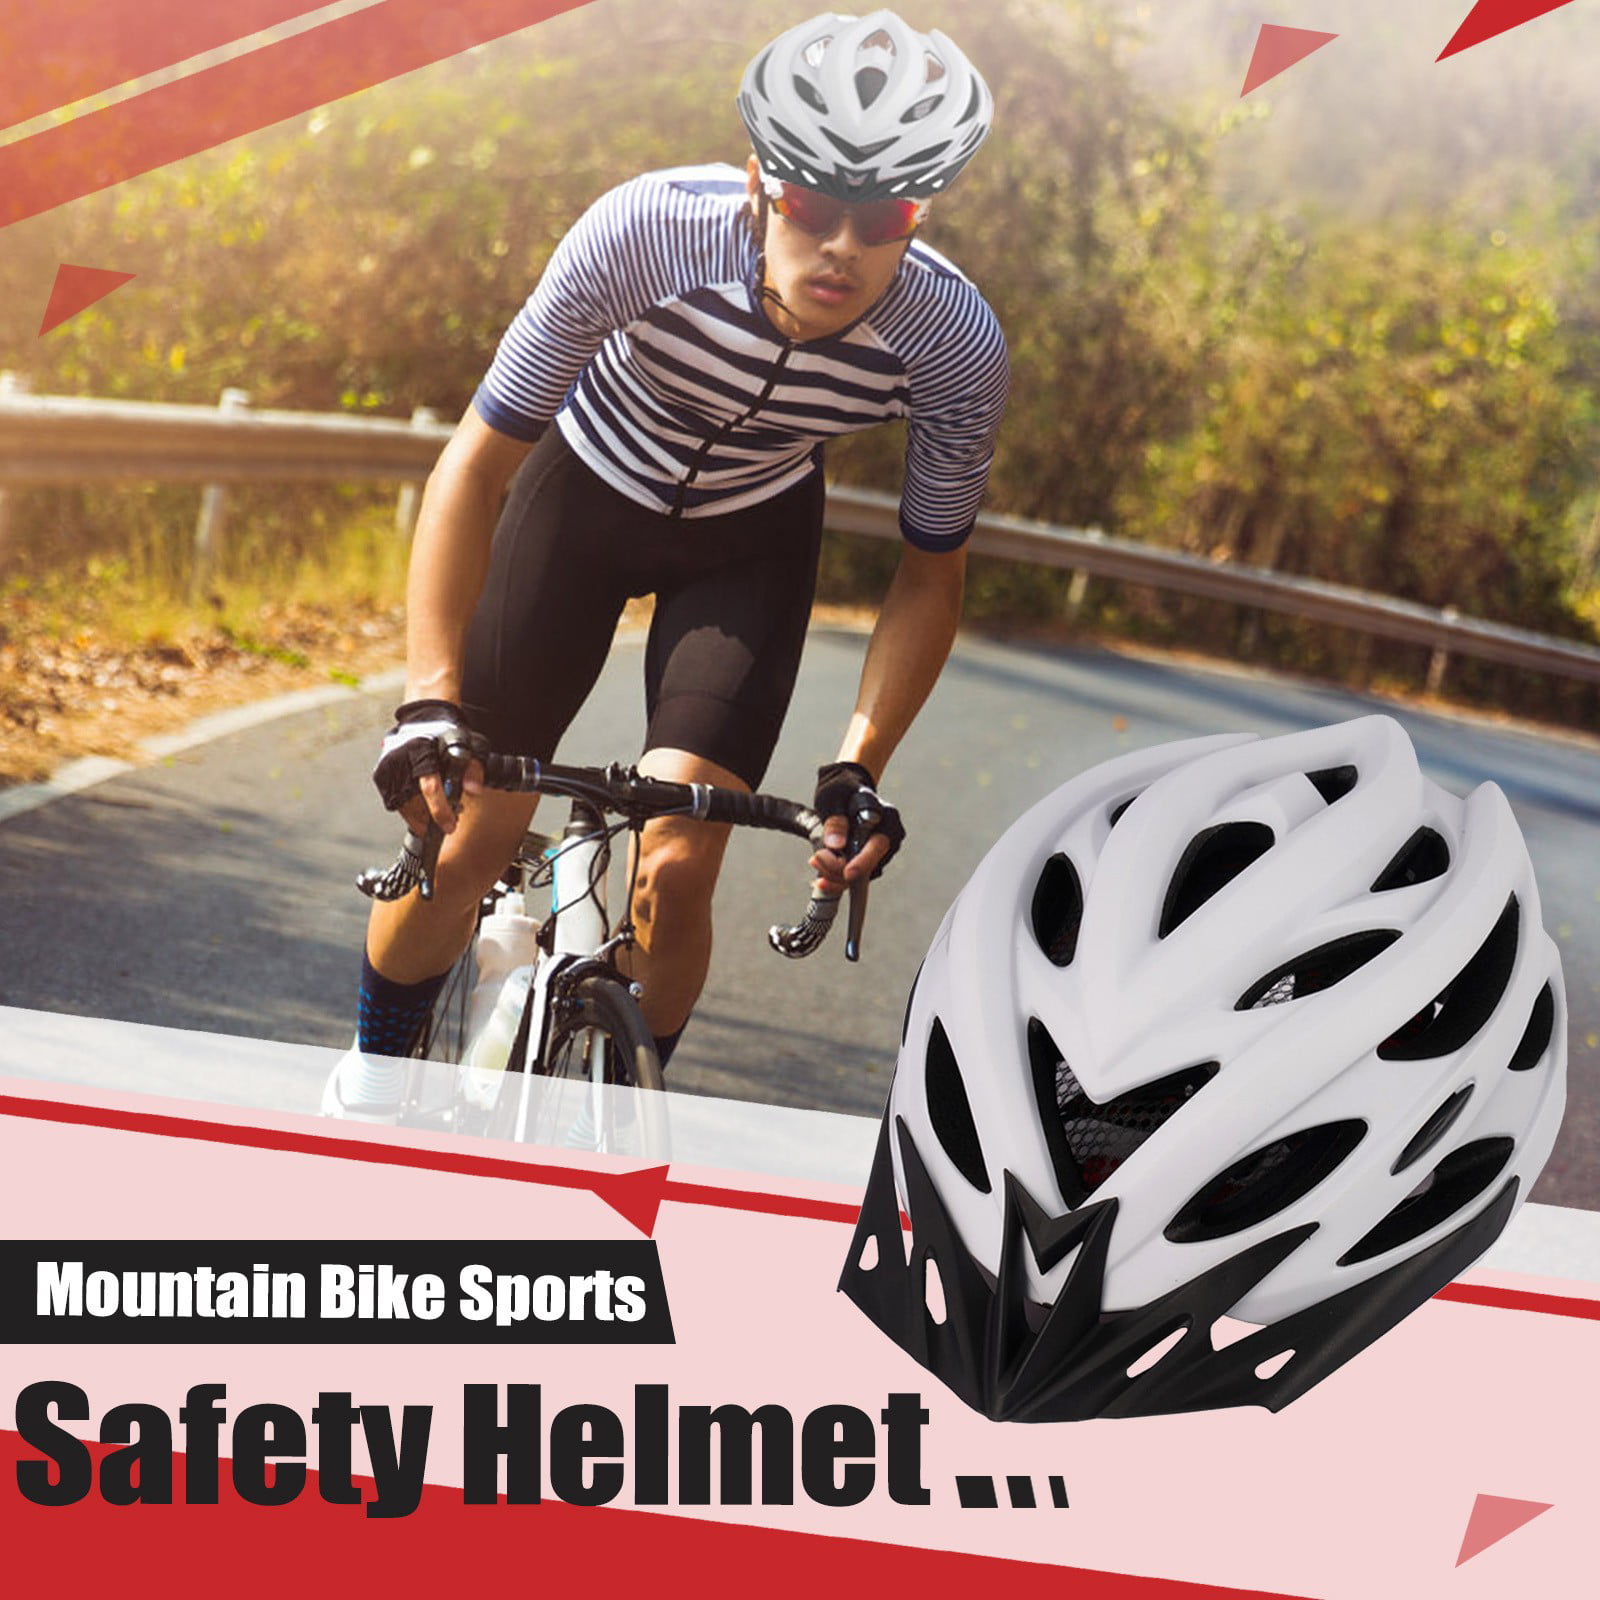 KAIHSD Unisex Bicycle Helmet MTB Road Cycling Mountain Sports Safety Helmet Ventilation Sports Safety Helmet Lightweight Bicycle Cycling for Adult Adjustable Size Bicycle Helmet 